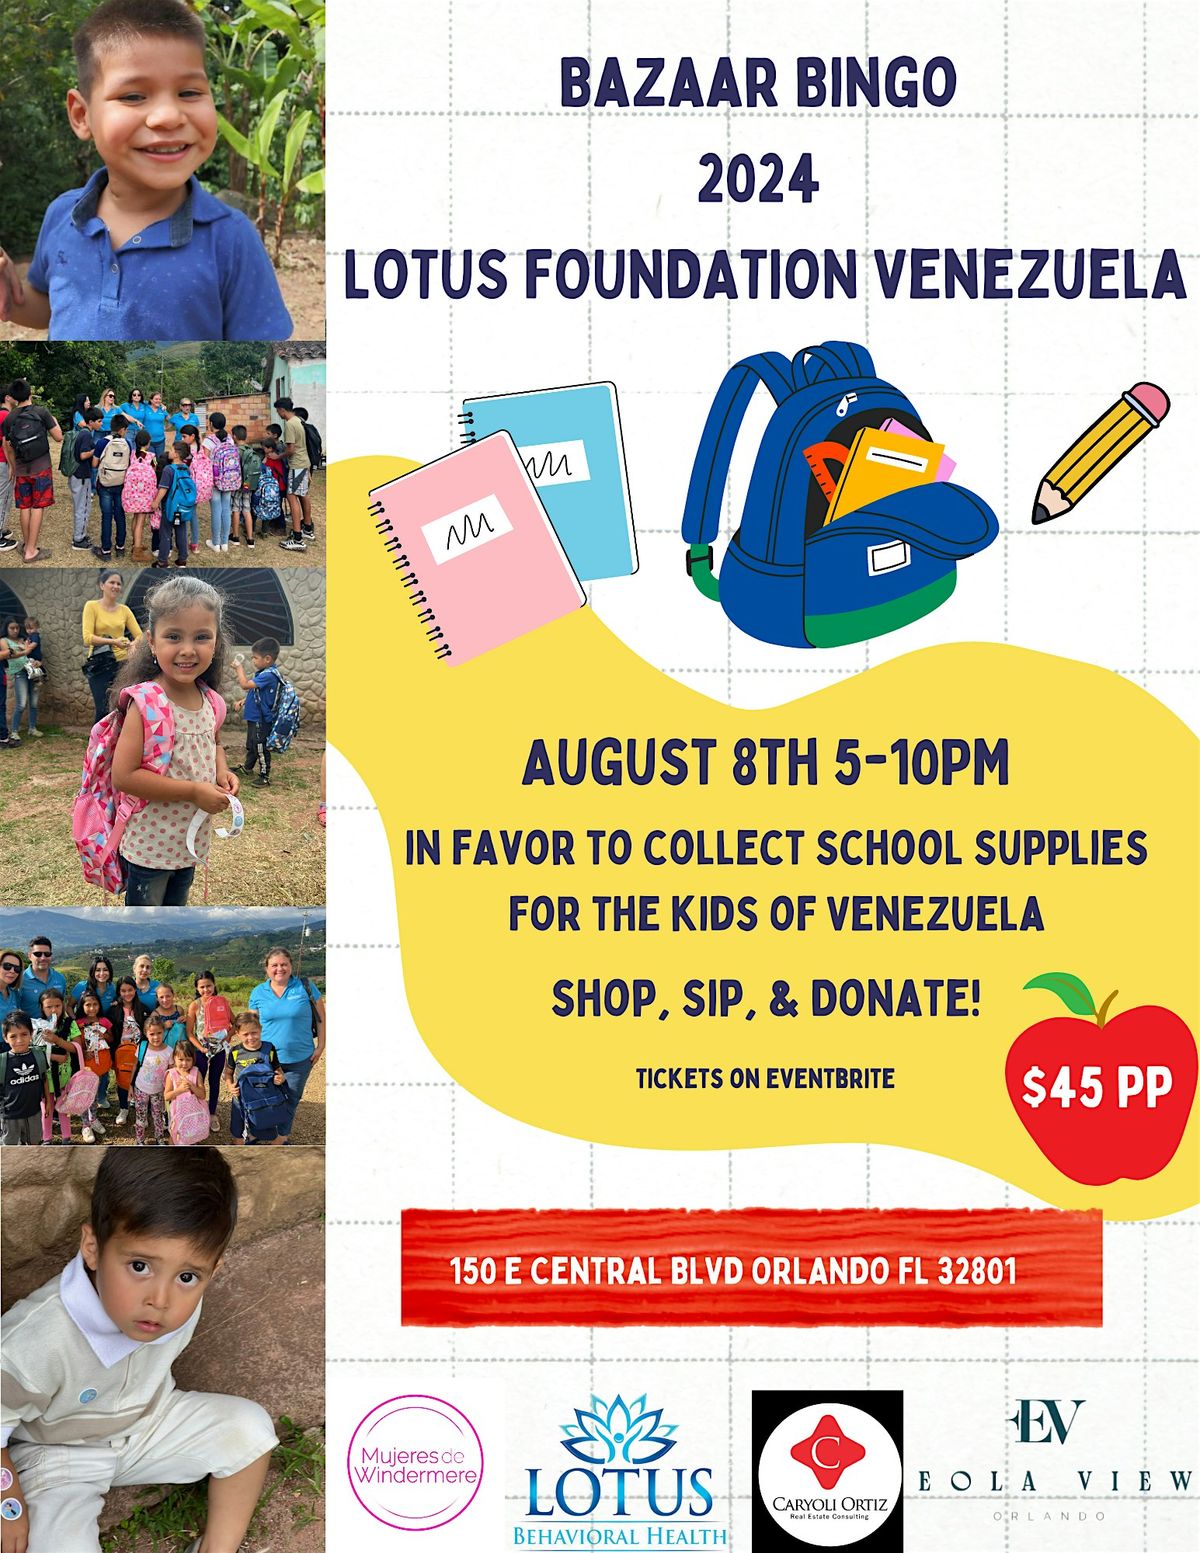 Bazaar Bingo for Lotus Foundation Venezuela